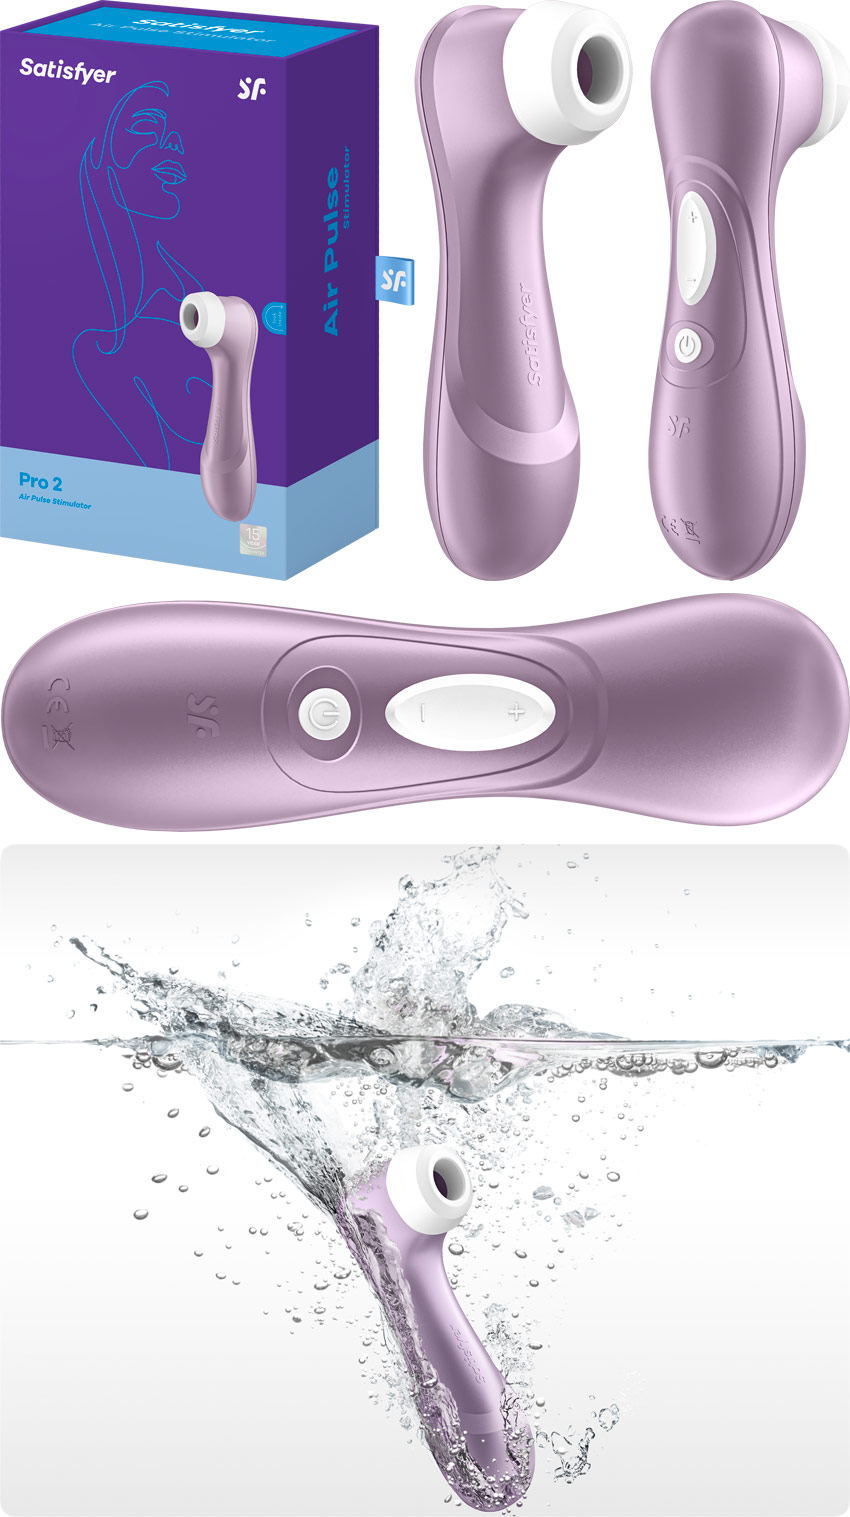 Satisfyer Pro 2 Next Generation - Clitoral Stimulator - Purple